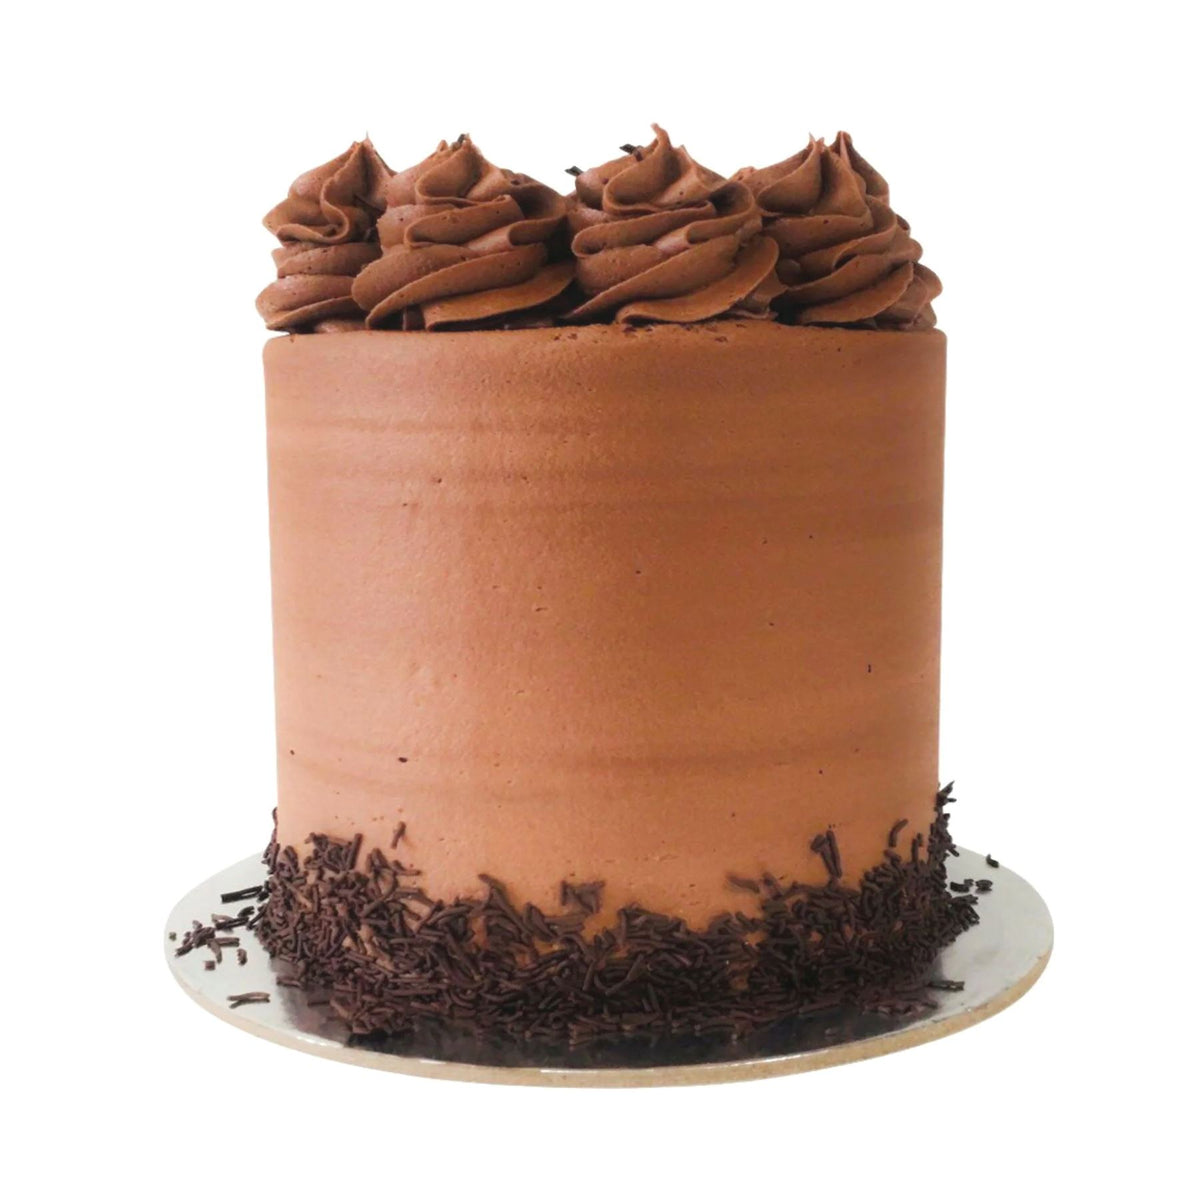 The Chocolate Vegan Cake Cakes The Cupcake Queens 